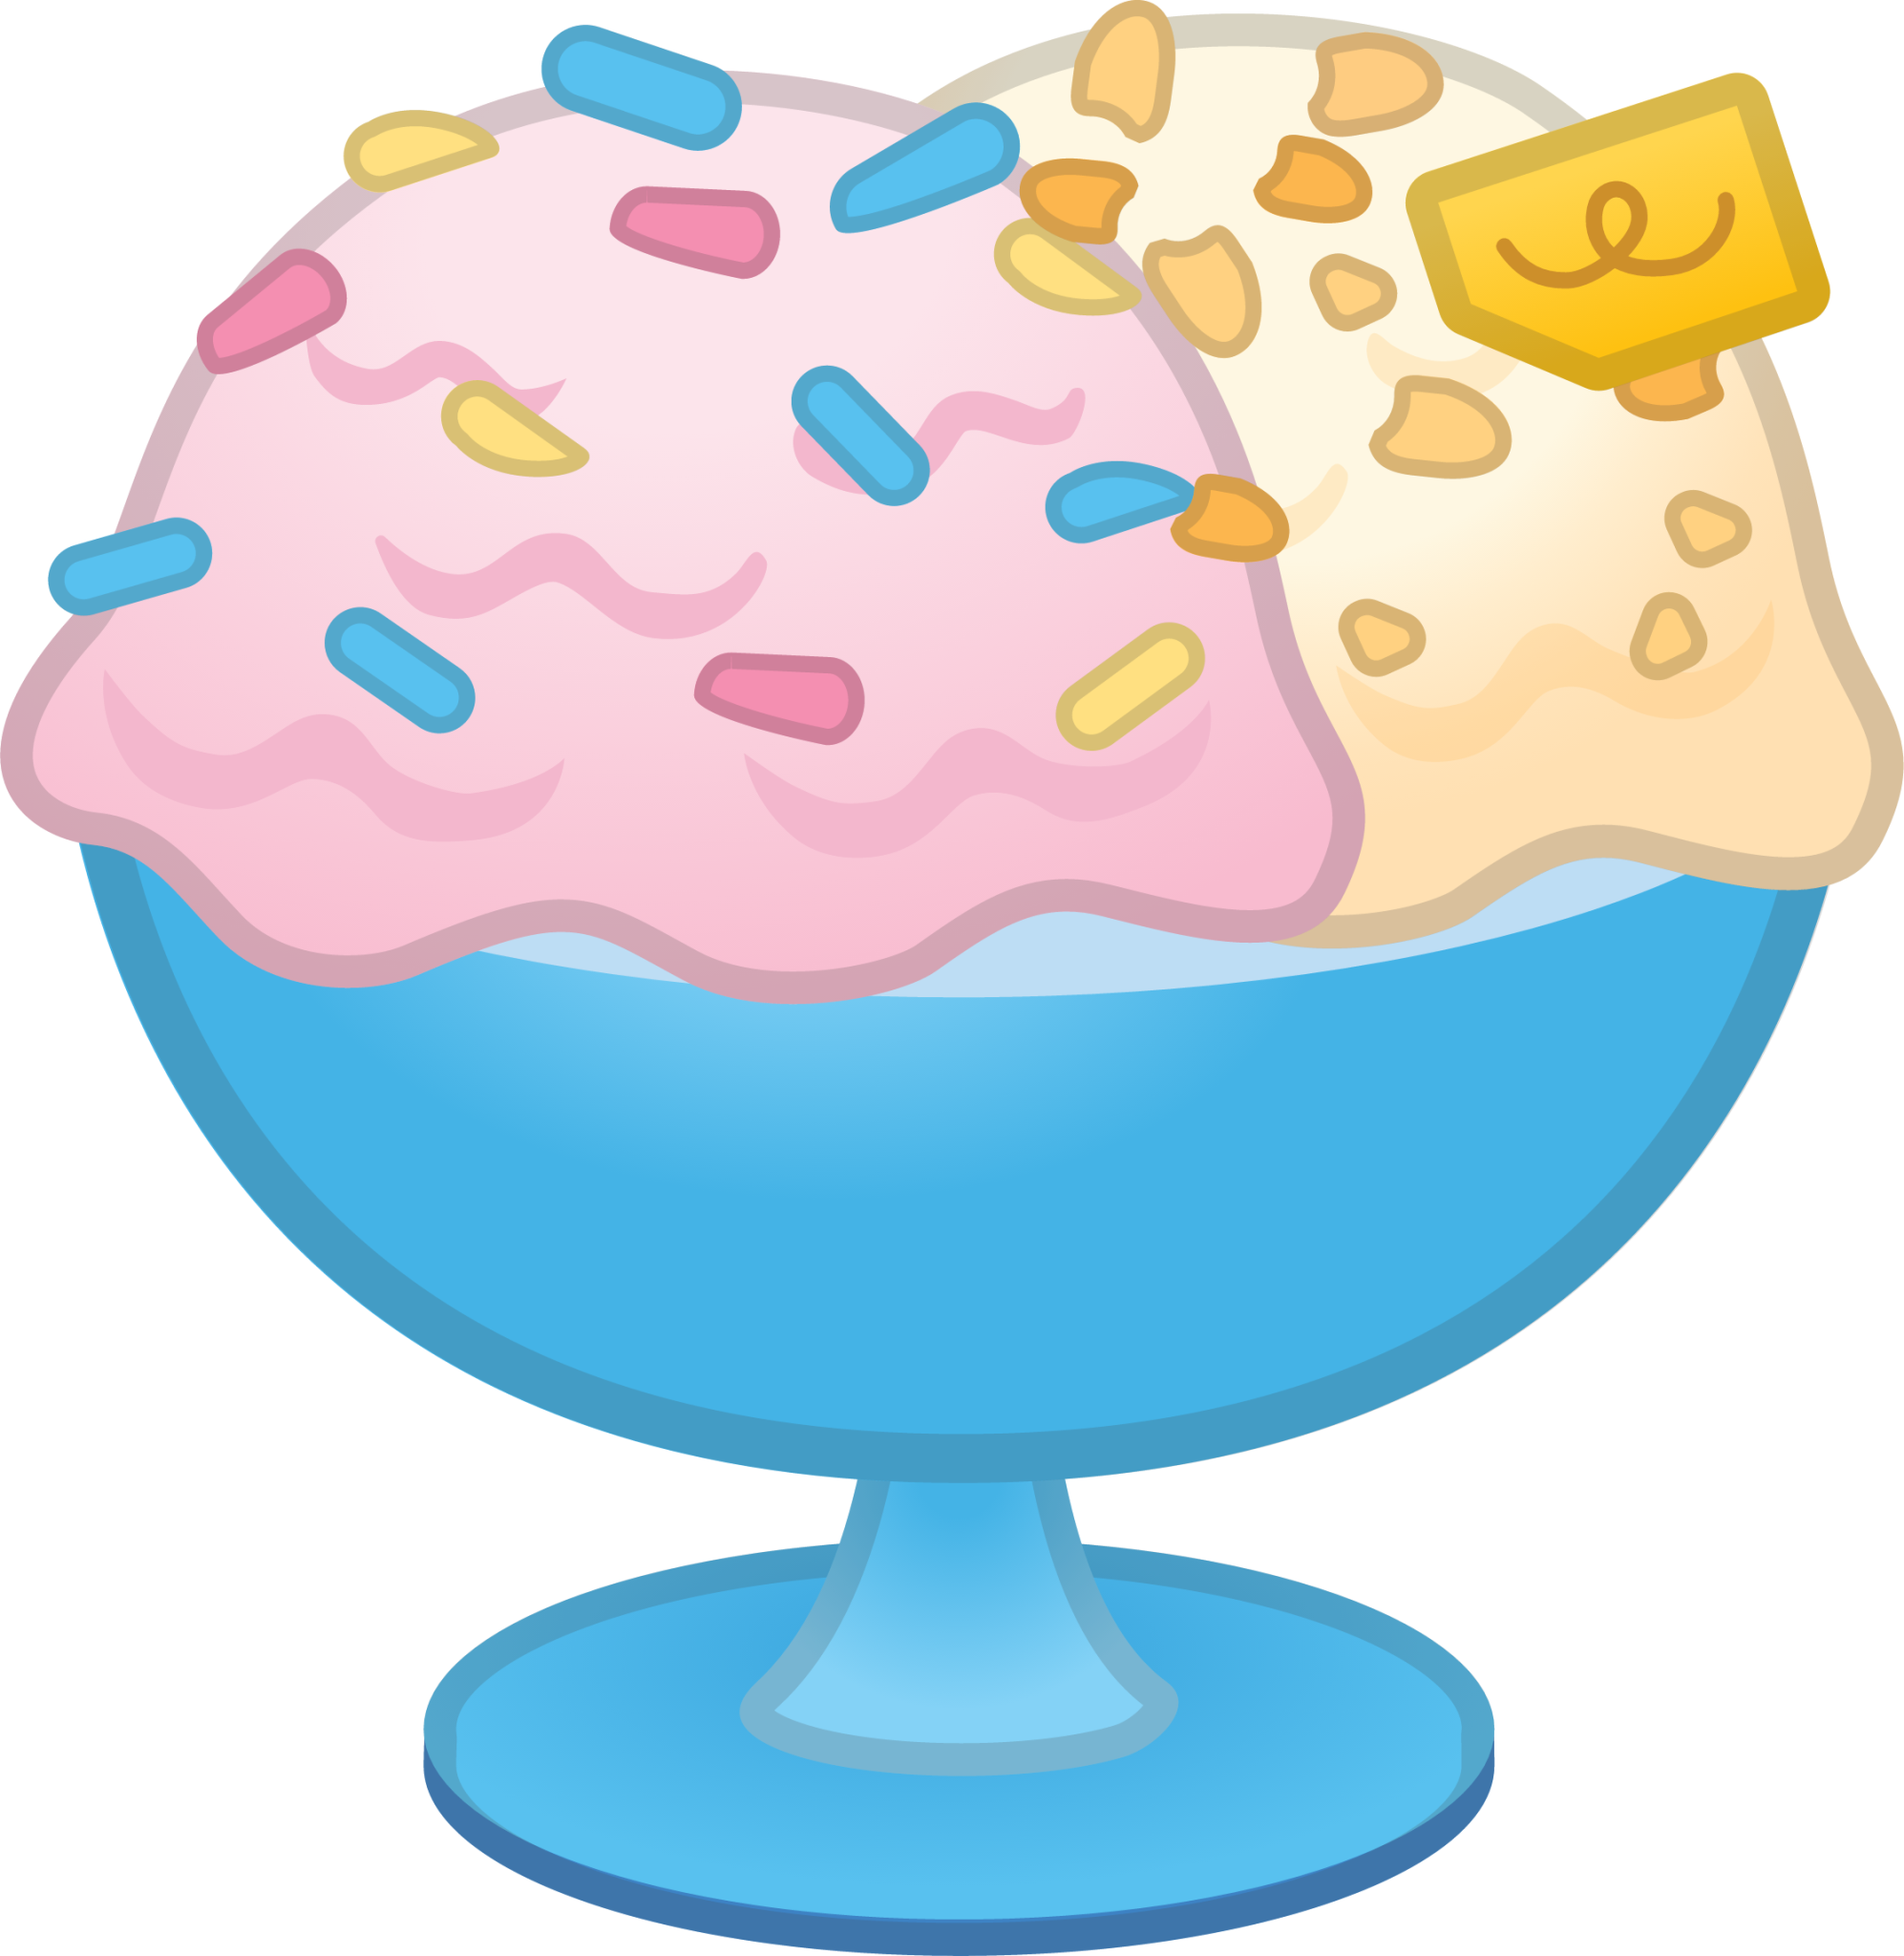 guess the emoji cake pudding ice cream